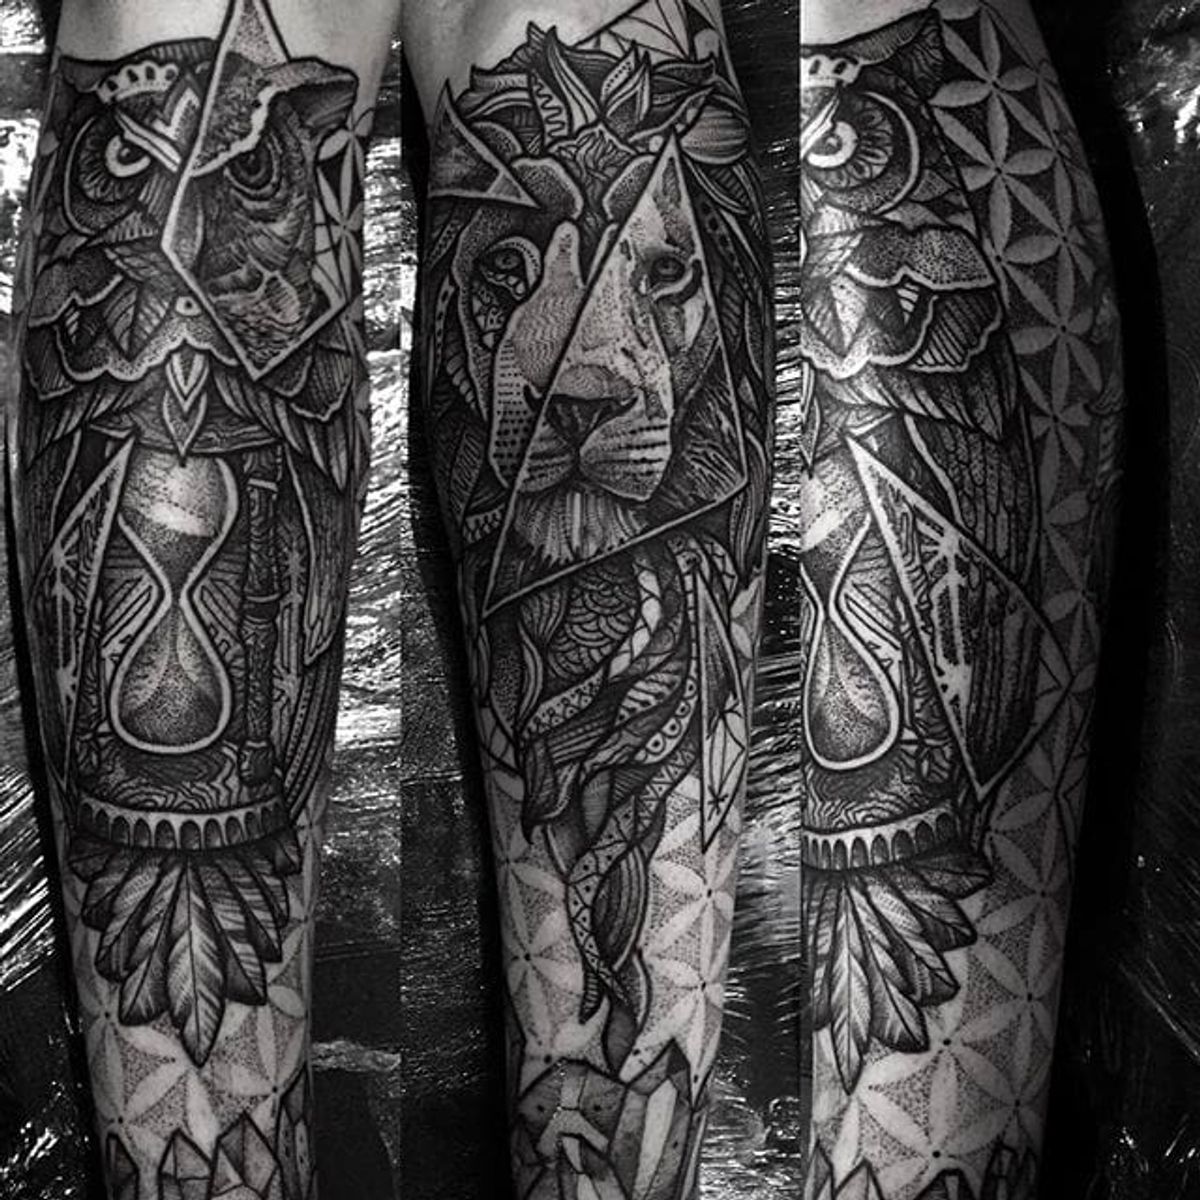 Tattoo uploaded by rcallejatattoo • An owl tattoo and a lion on the other.  Insane looking lower leg tattoos done by Paul Davies. #pauldavies  #blacktattoo #illustrativetattoo #geometrictattoo #dotstolines #lion #owl  #shins • Tattoodo